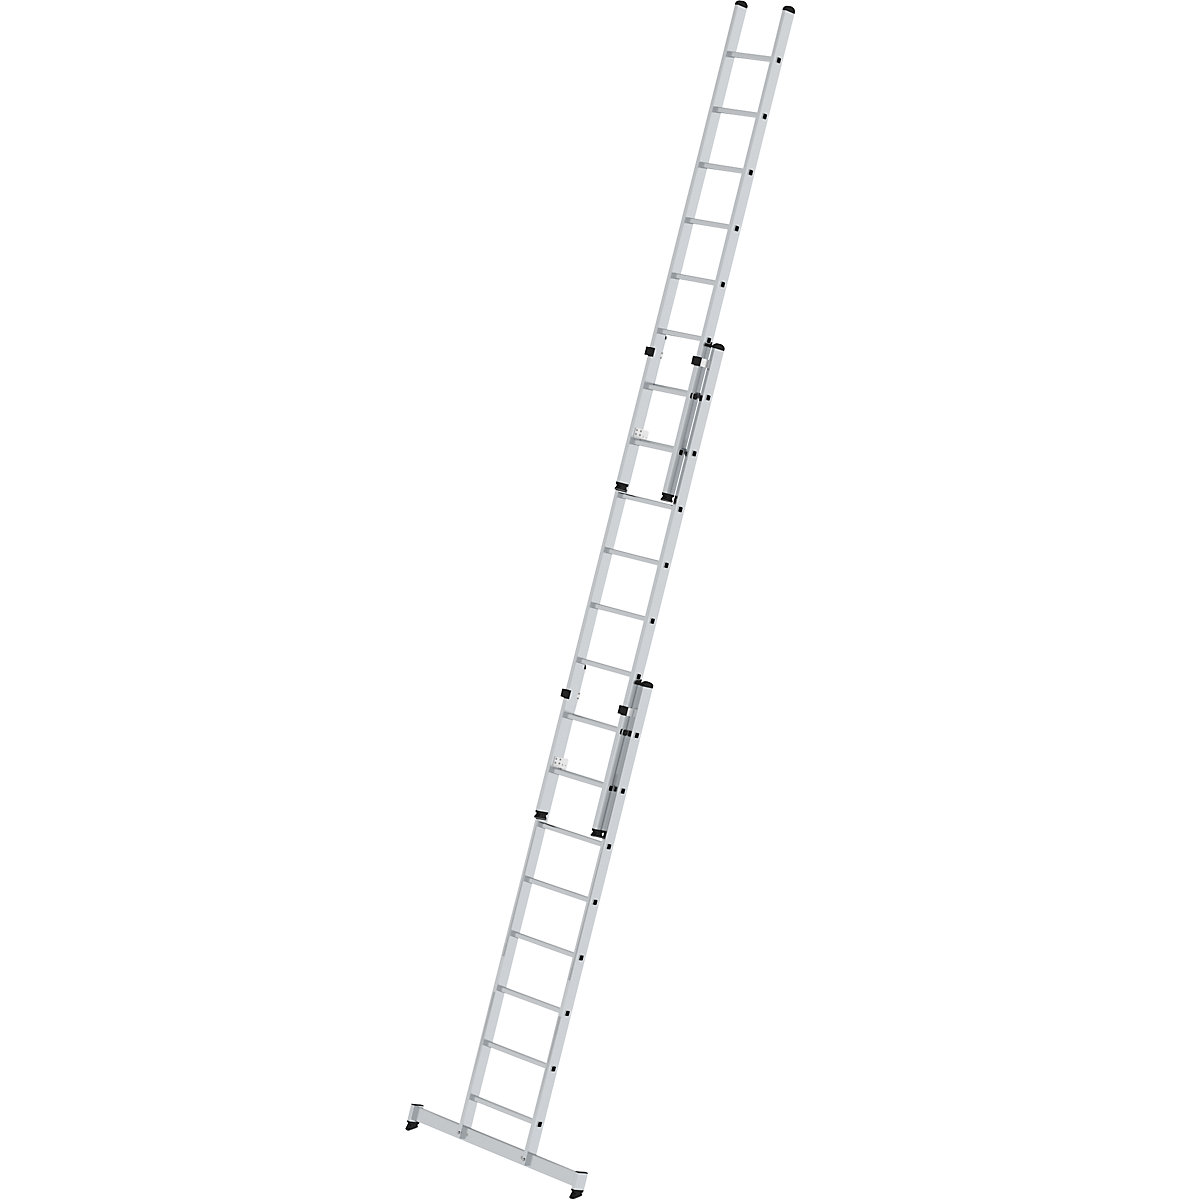 Height adjustable lean-to ladder – MUNK